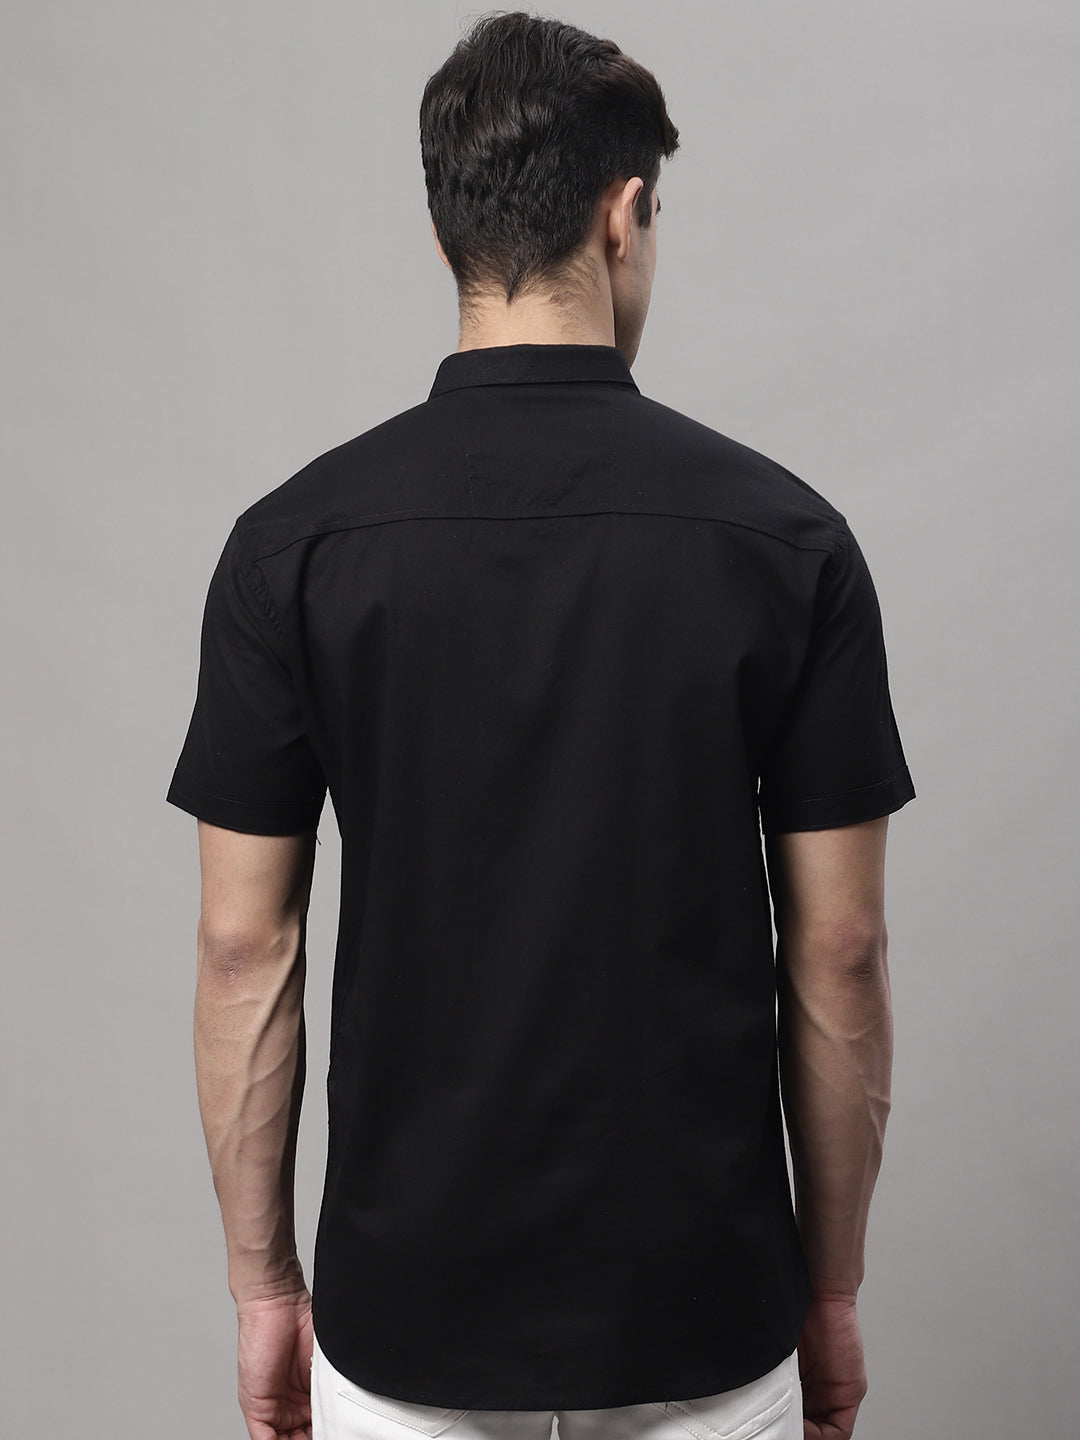 Unique and Fashionable Pure Cotton Half shirt - Black